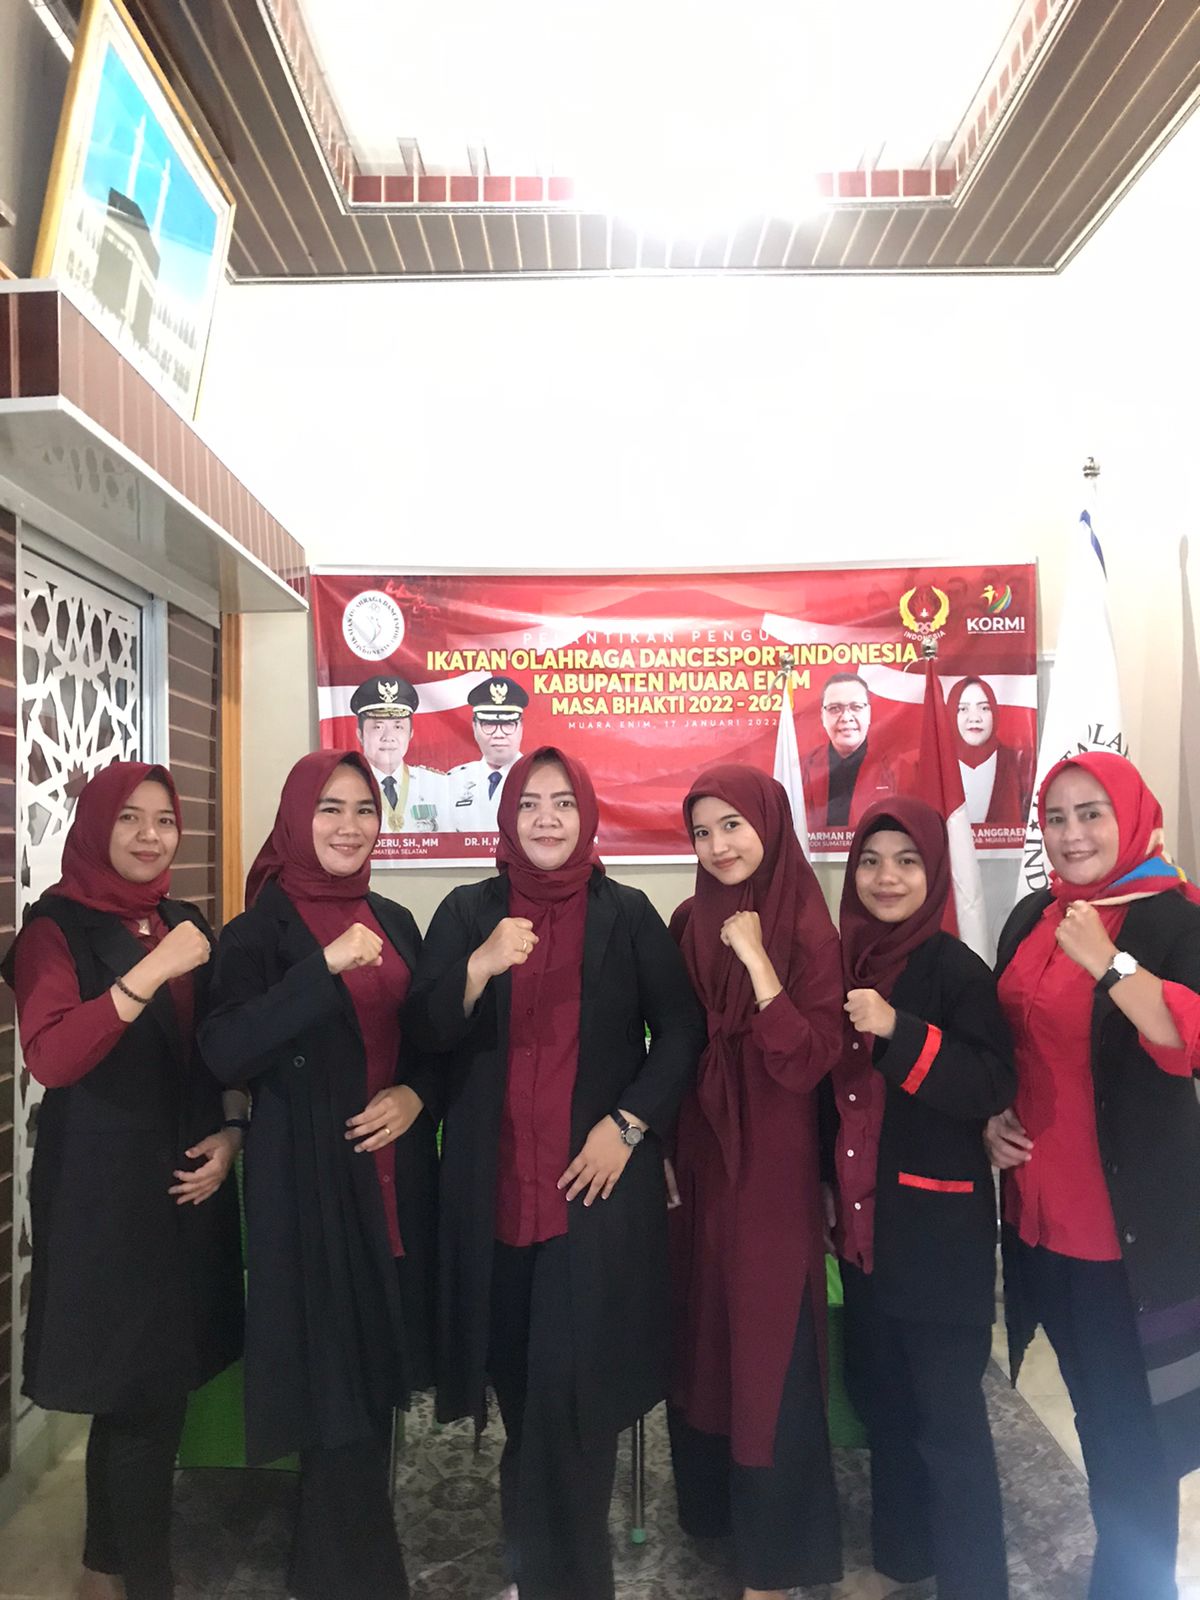 Pengurus Ikatan Olaraga Dancersport Indonesia [IODI] Kabupaten Muara Enim resmi dilantik secara virtual oleh Ketua IODI Provinsi Sumatera Selatan, Ir Supraman Romans Periode 2022-2027.